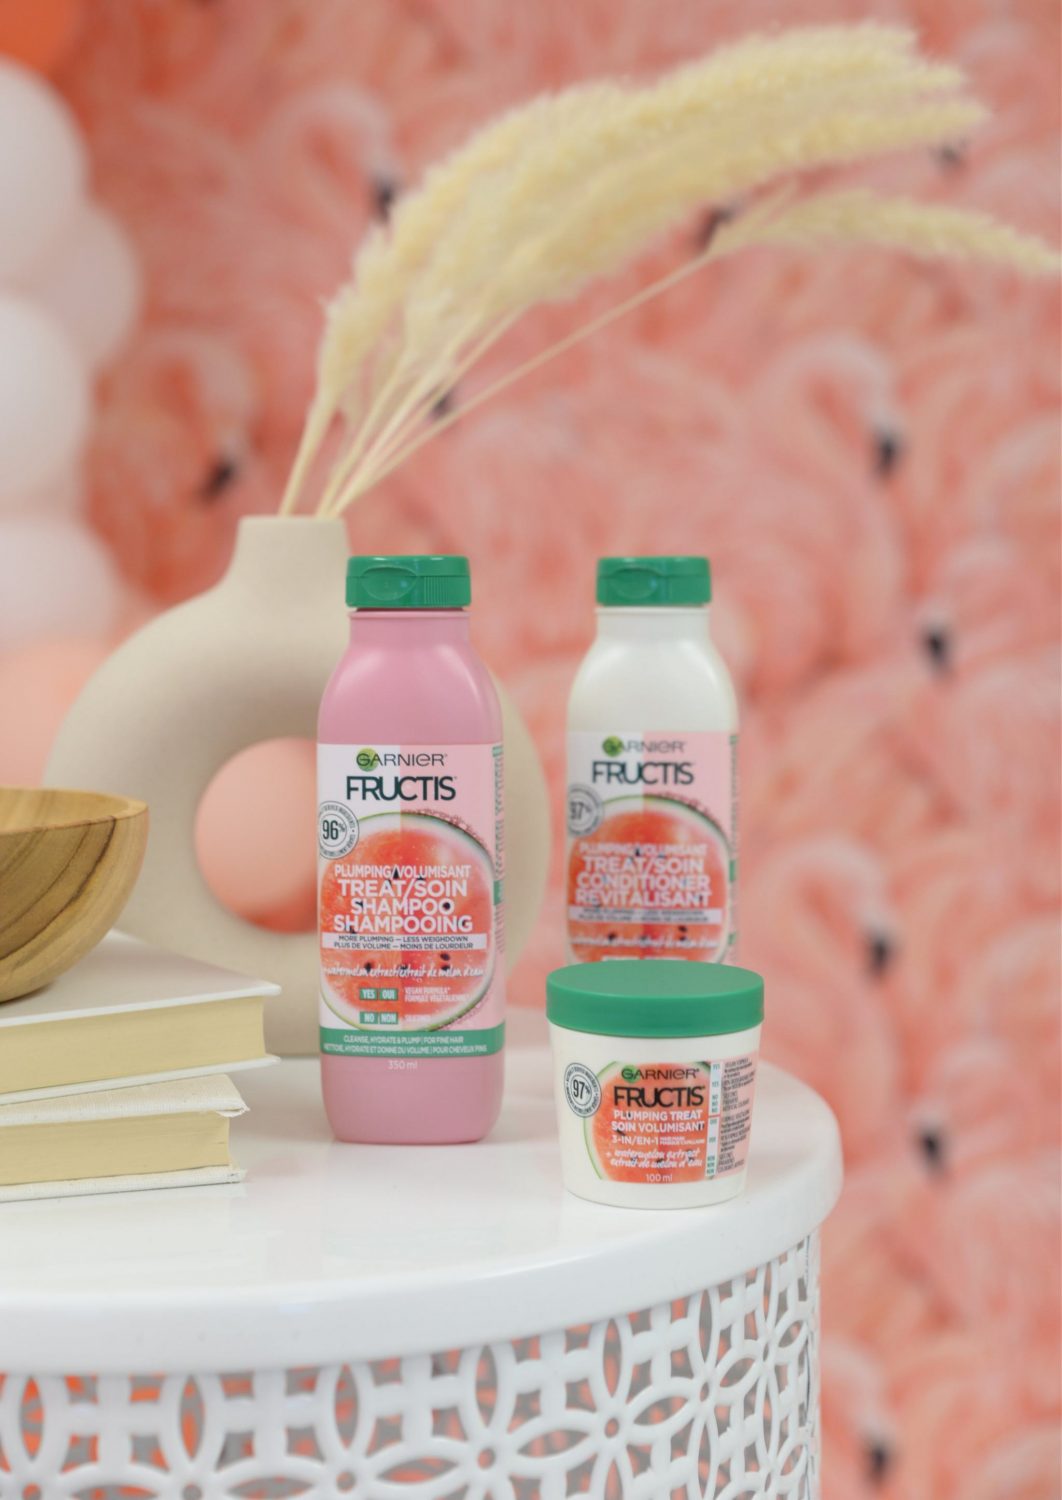 Garnier Fructis Hair Treats Watermelon Shampoo and Conditioner